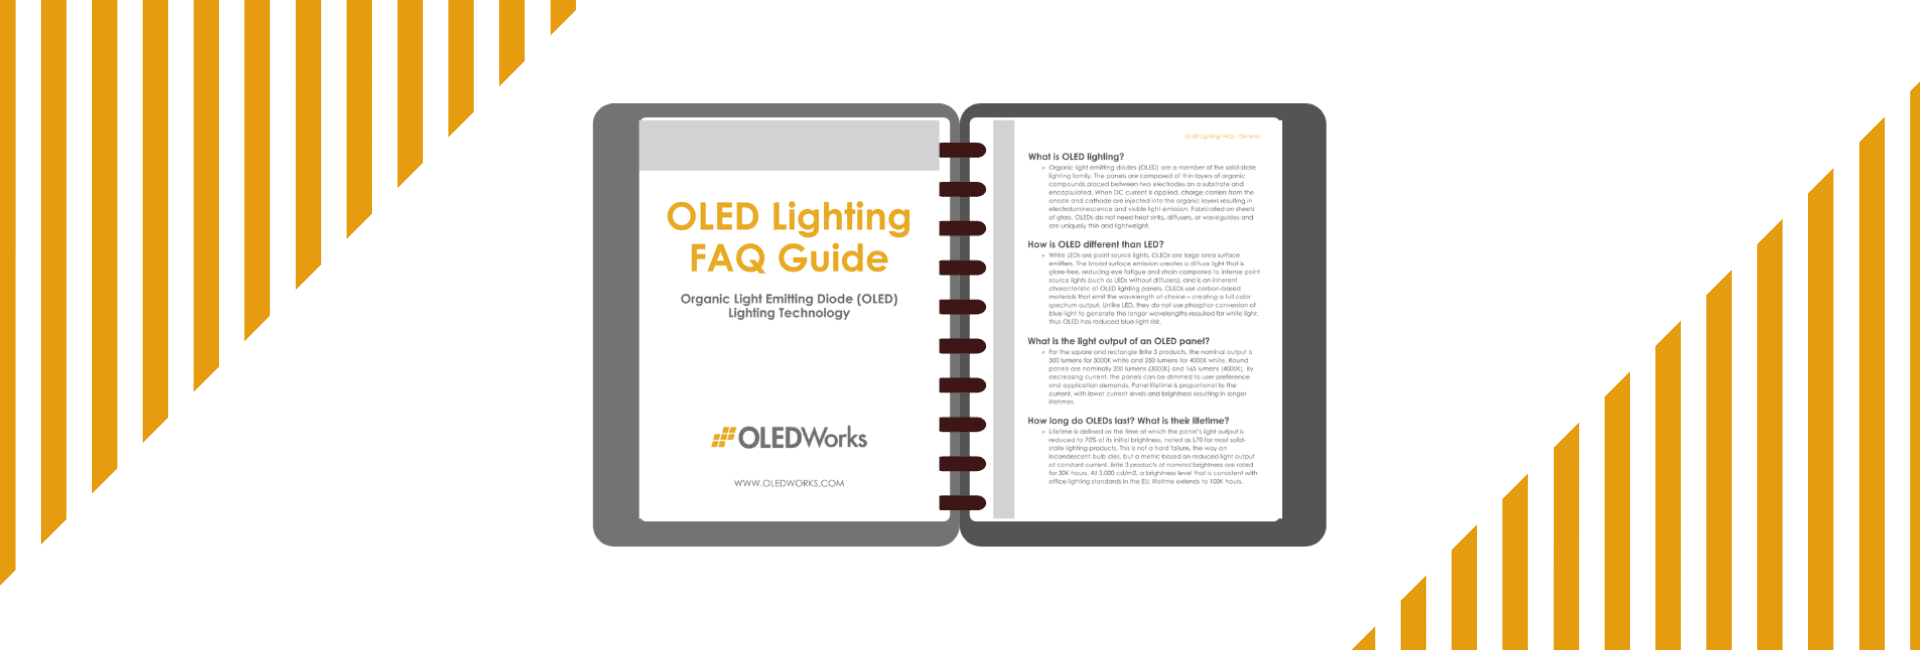 [FAQs] The OLED Lighting FAQ Guide